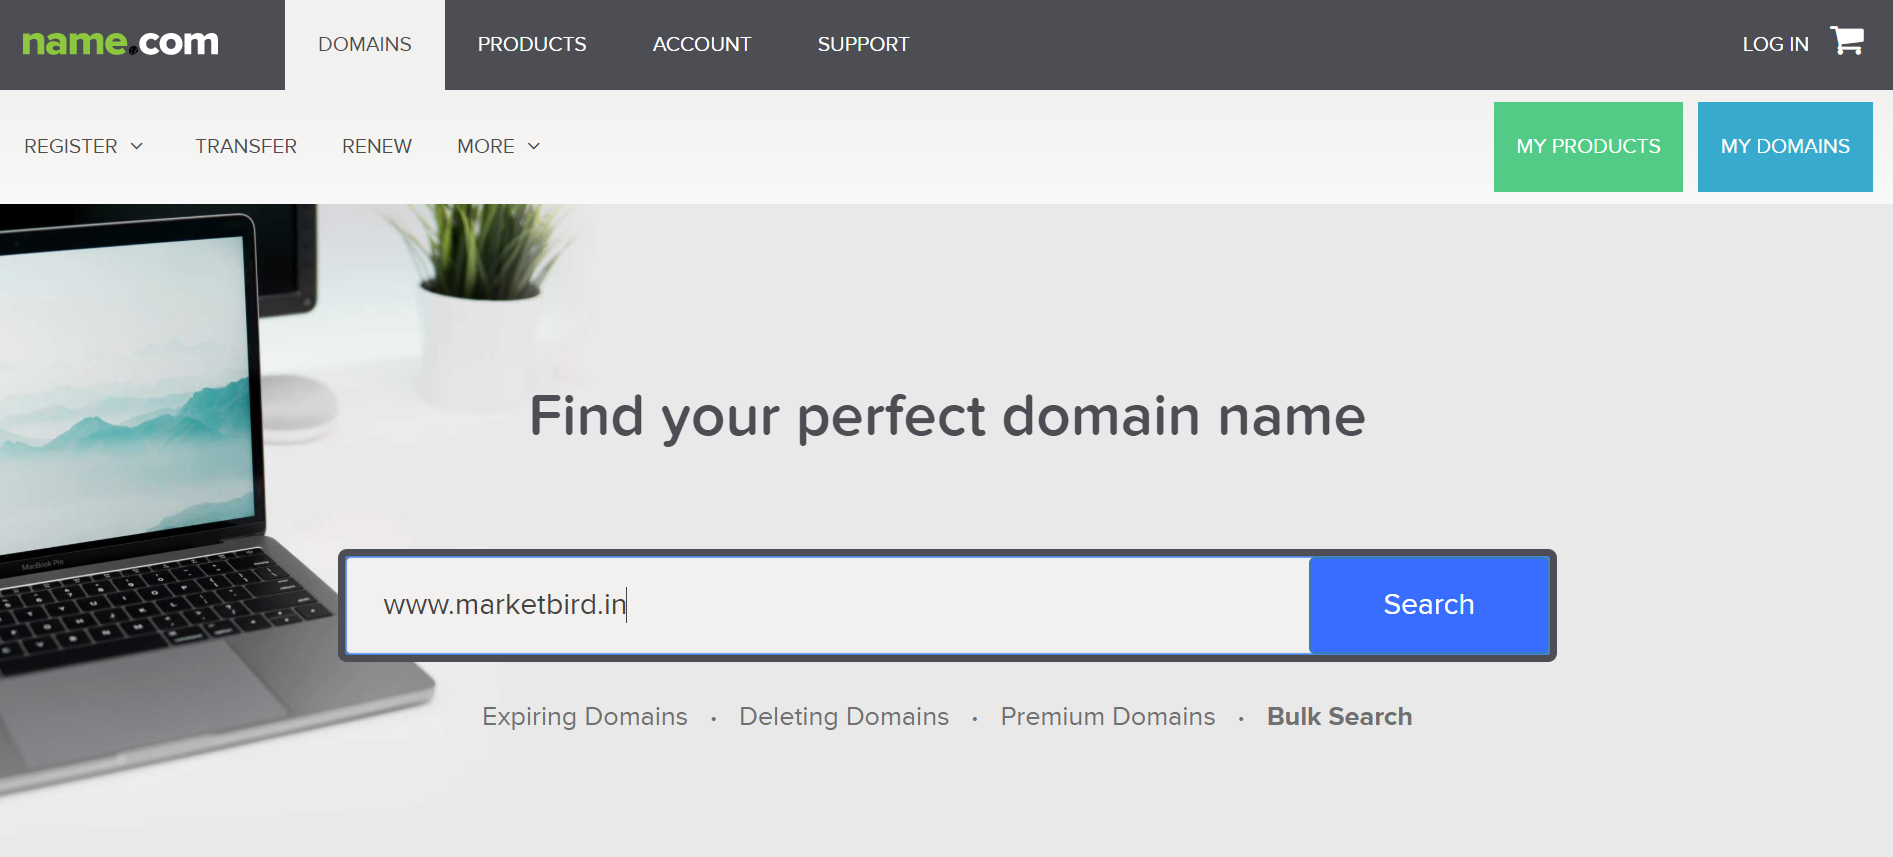 Domain Names Search